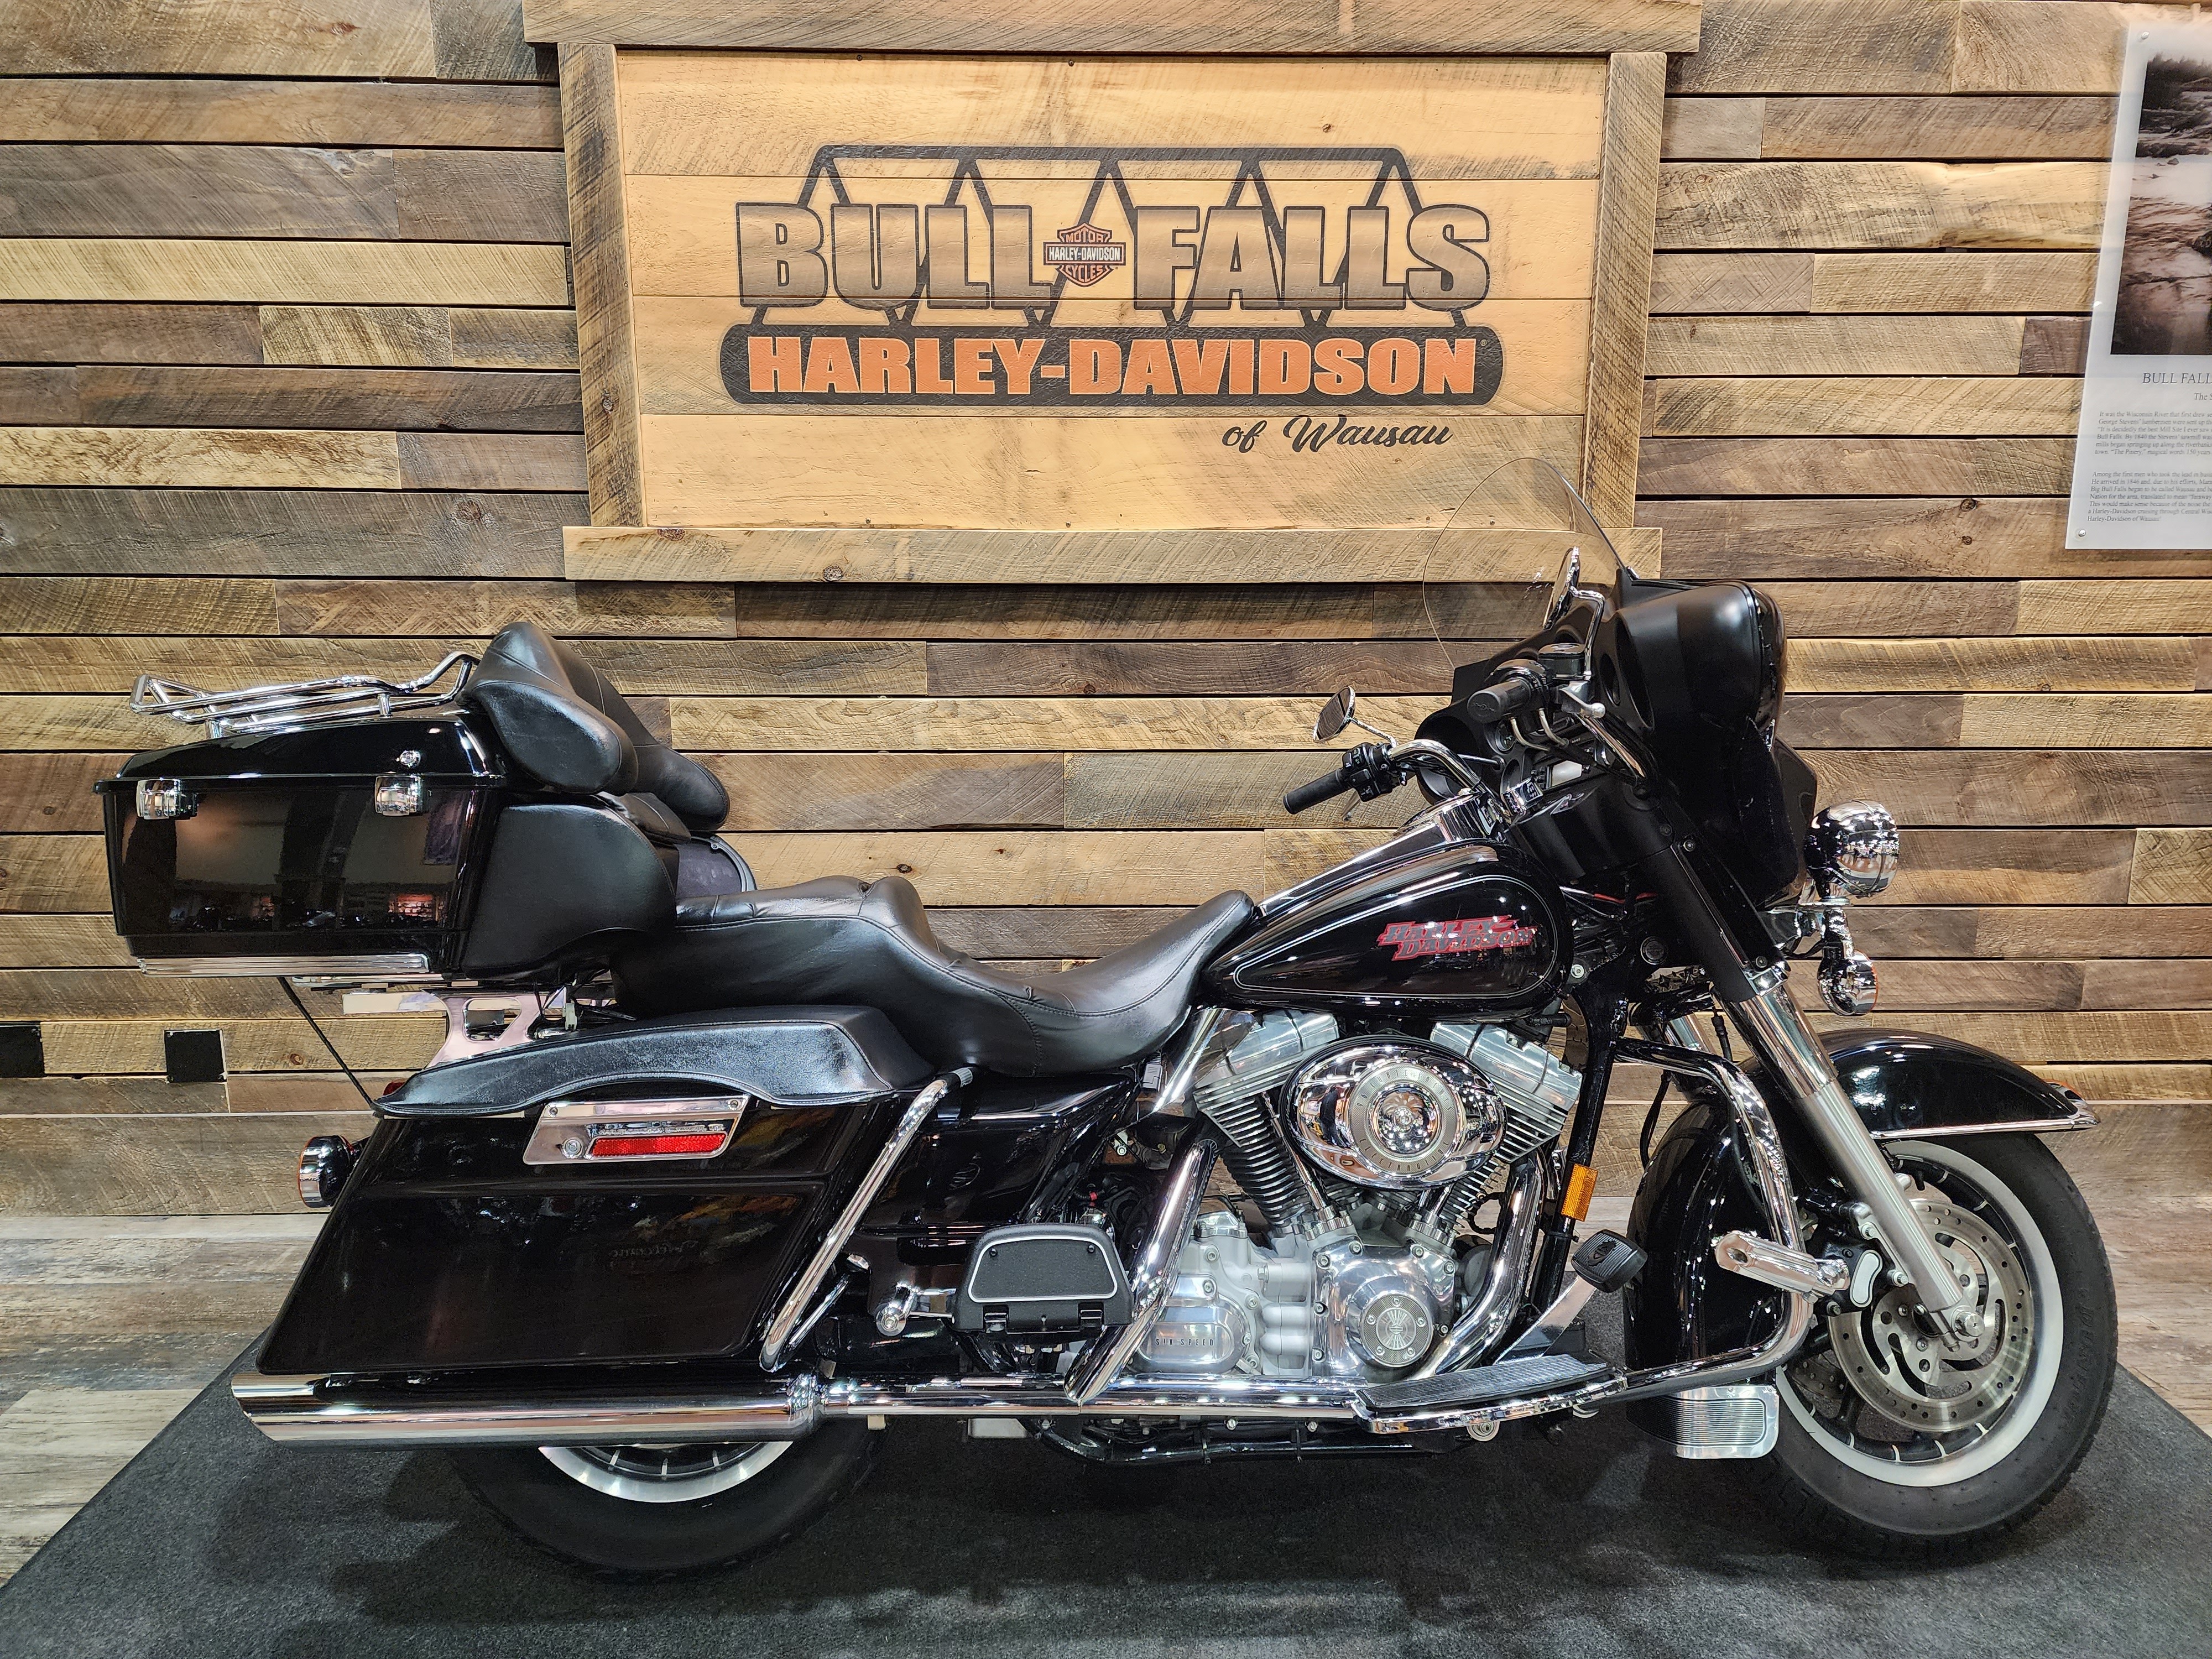 2007 Harley-Davidson Electra Glide Standard at Bull Falls Harley-Davidson